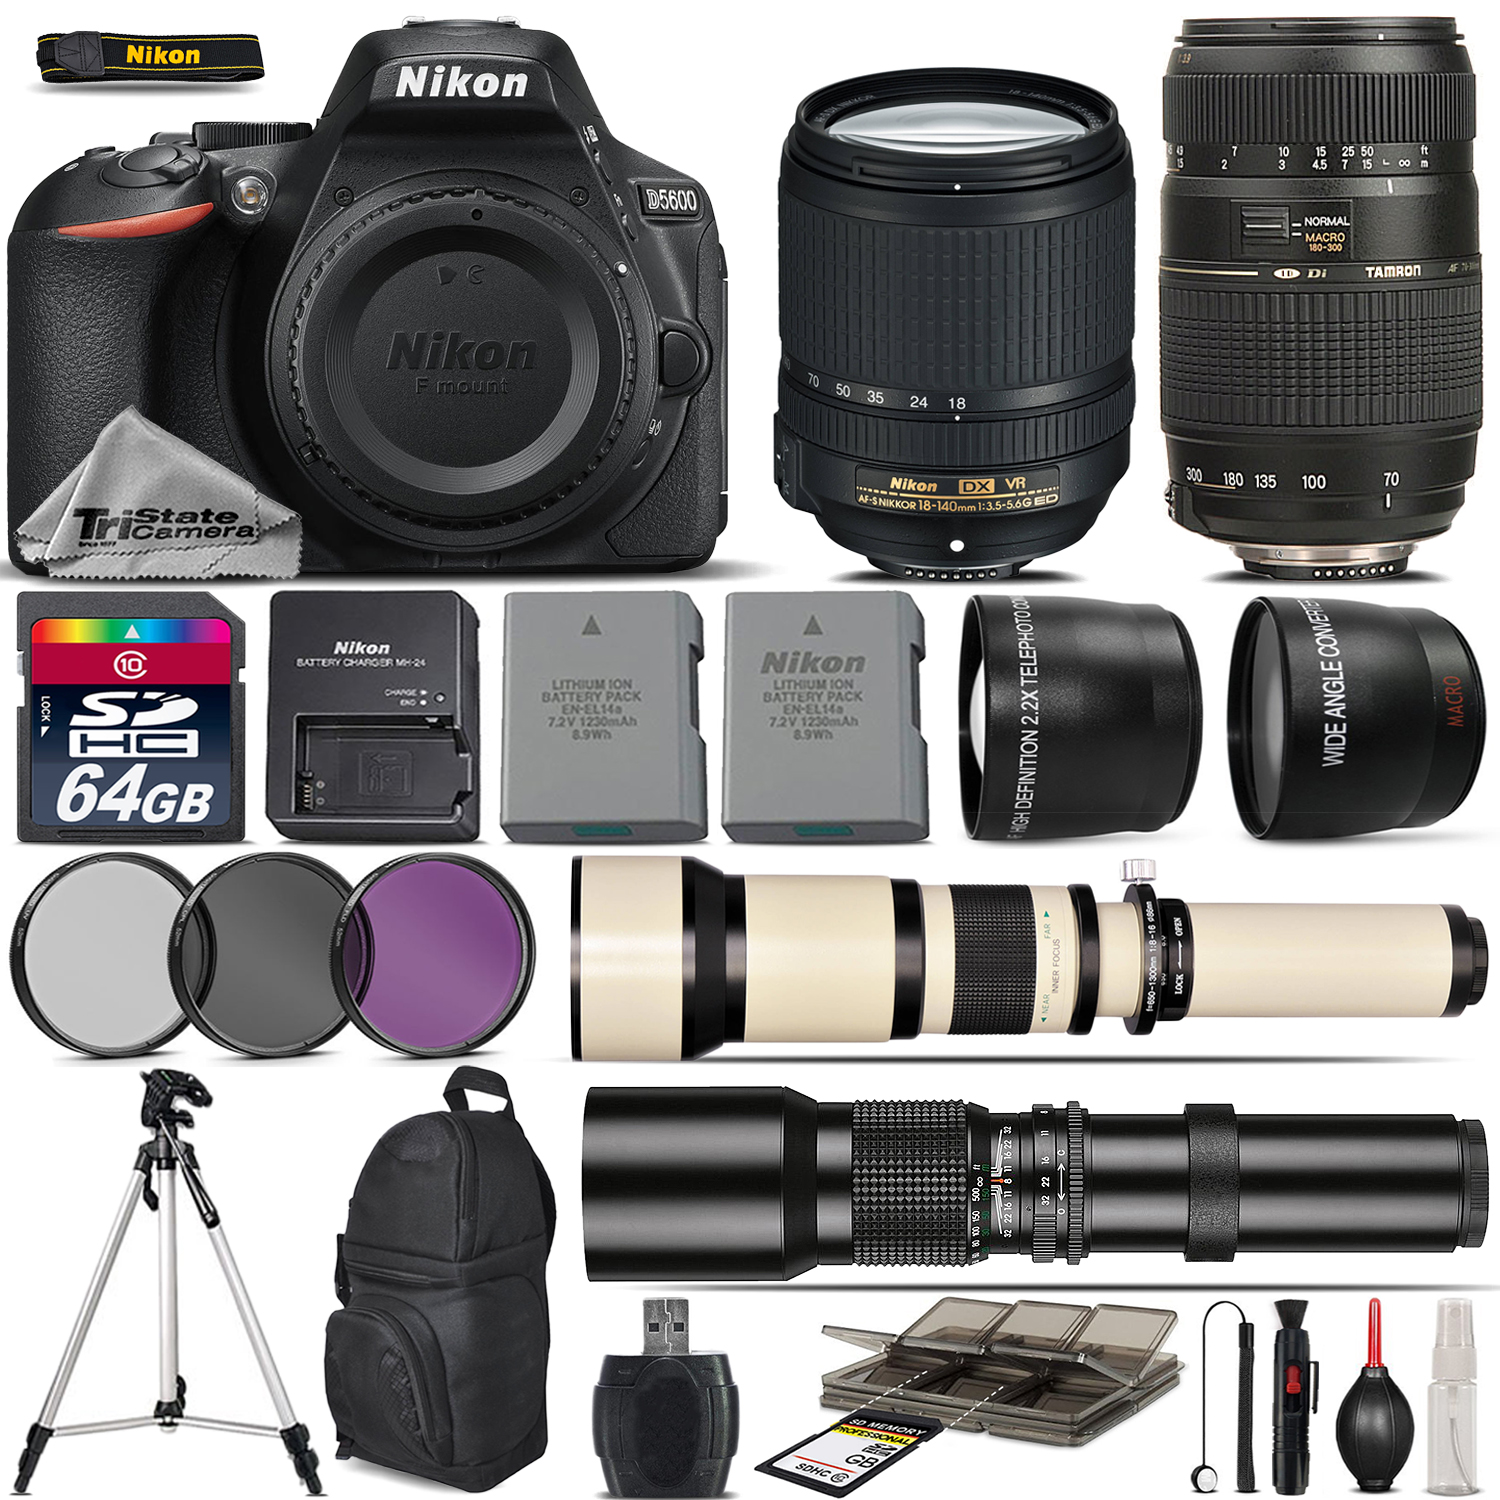 D5600 DSLR Camera + 18-140mm VR Lens + 70-300mm + 650-1300mm + 500mm Lens *FREE SHIPPING*